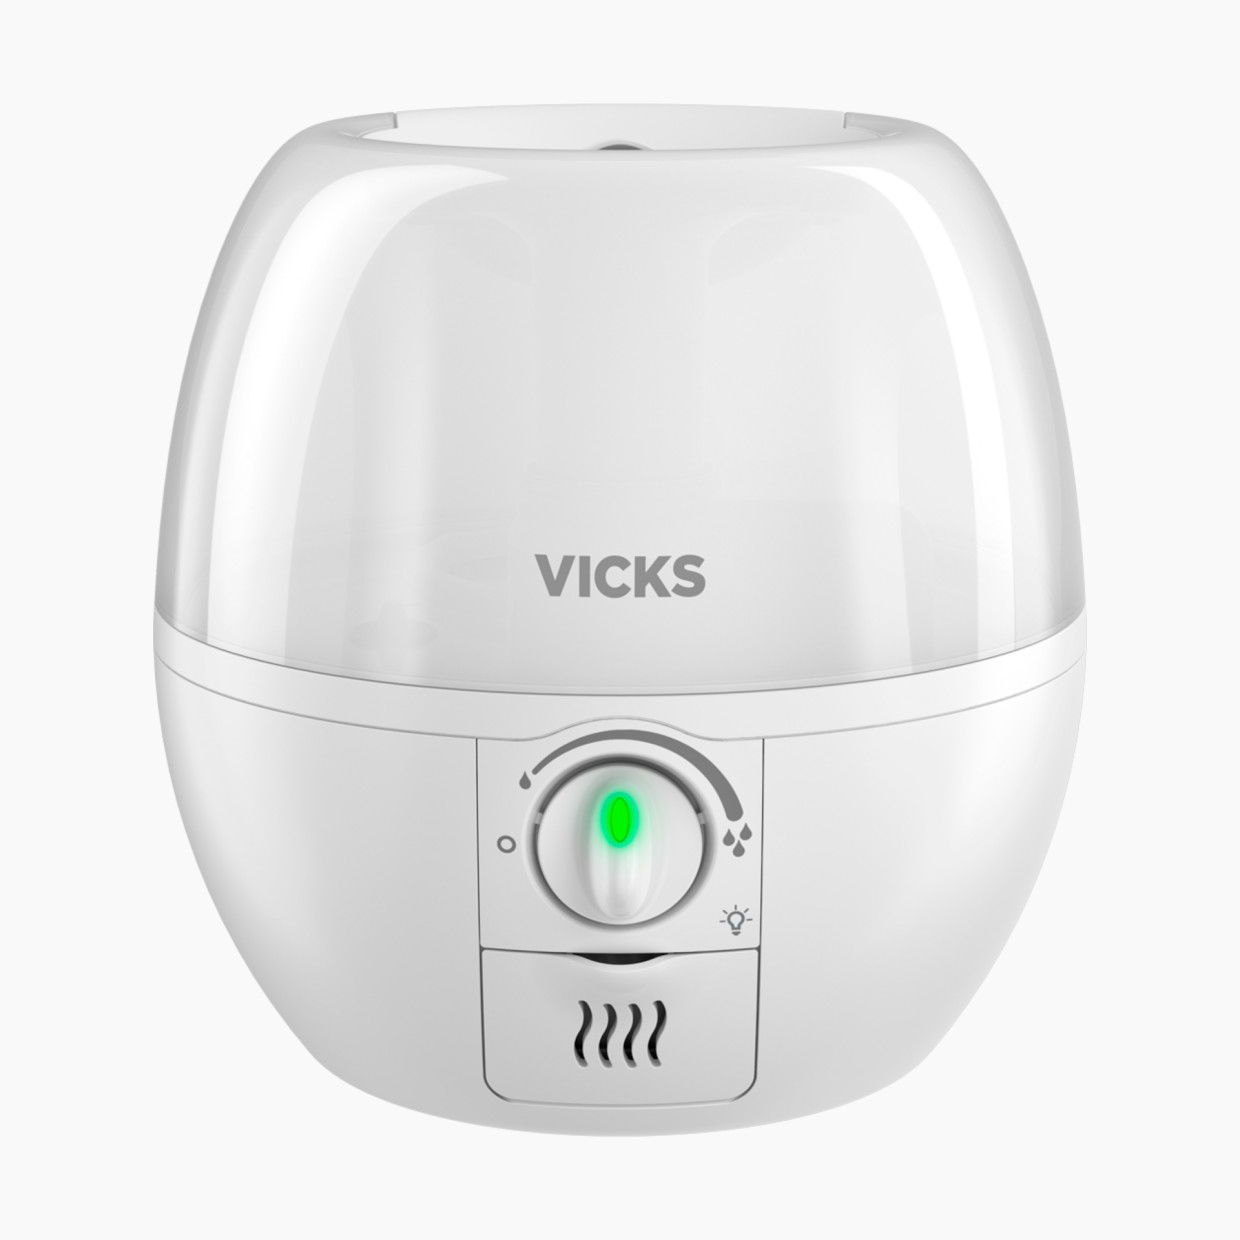 Vicks 3-in-1 Sleepy Time Humidifier